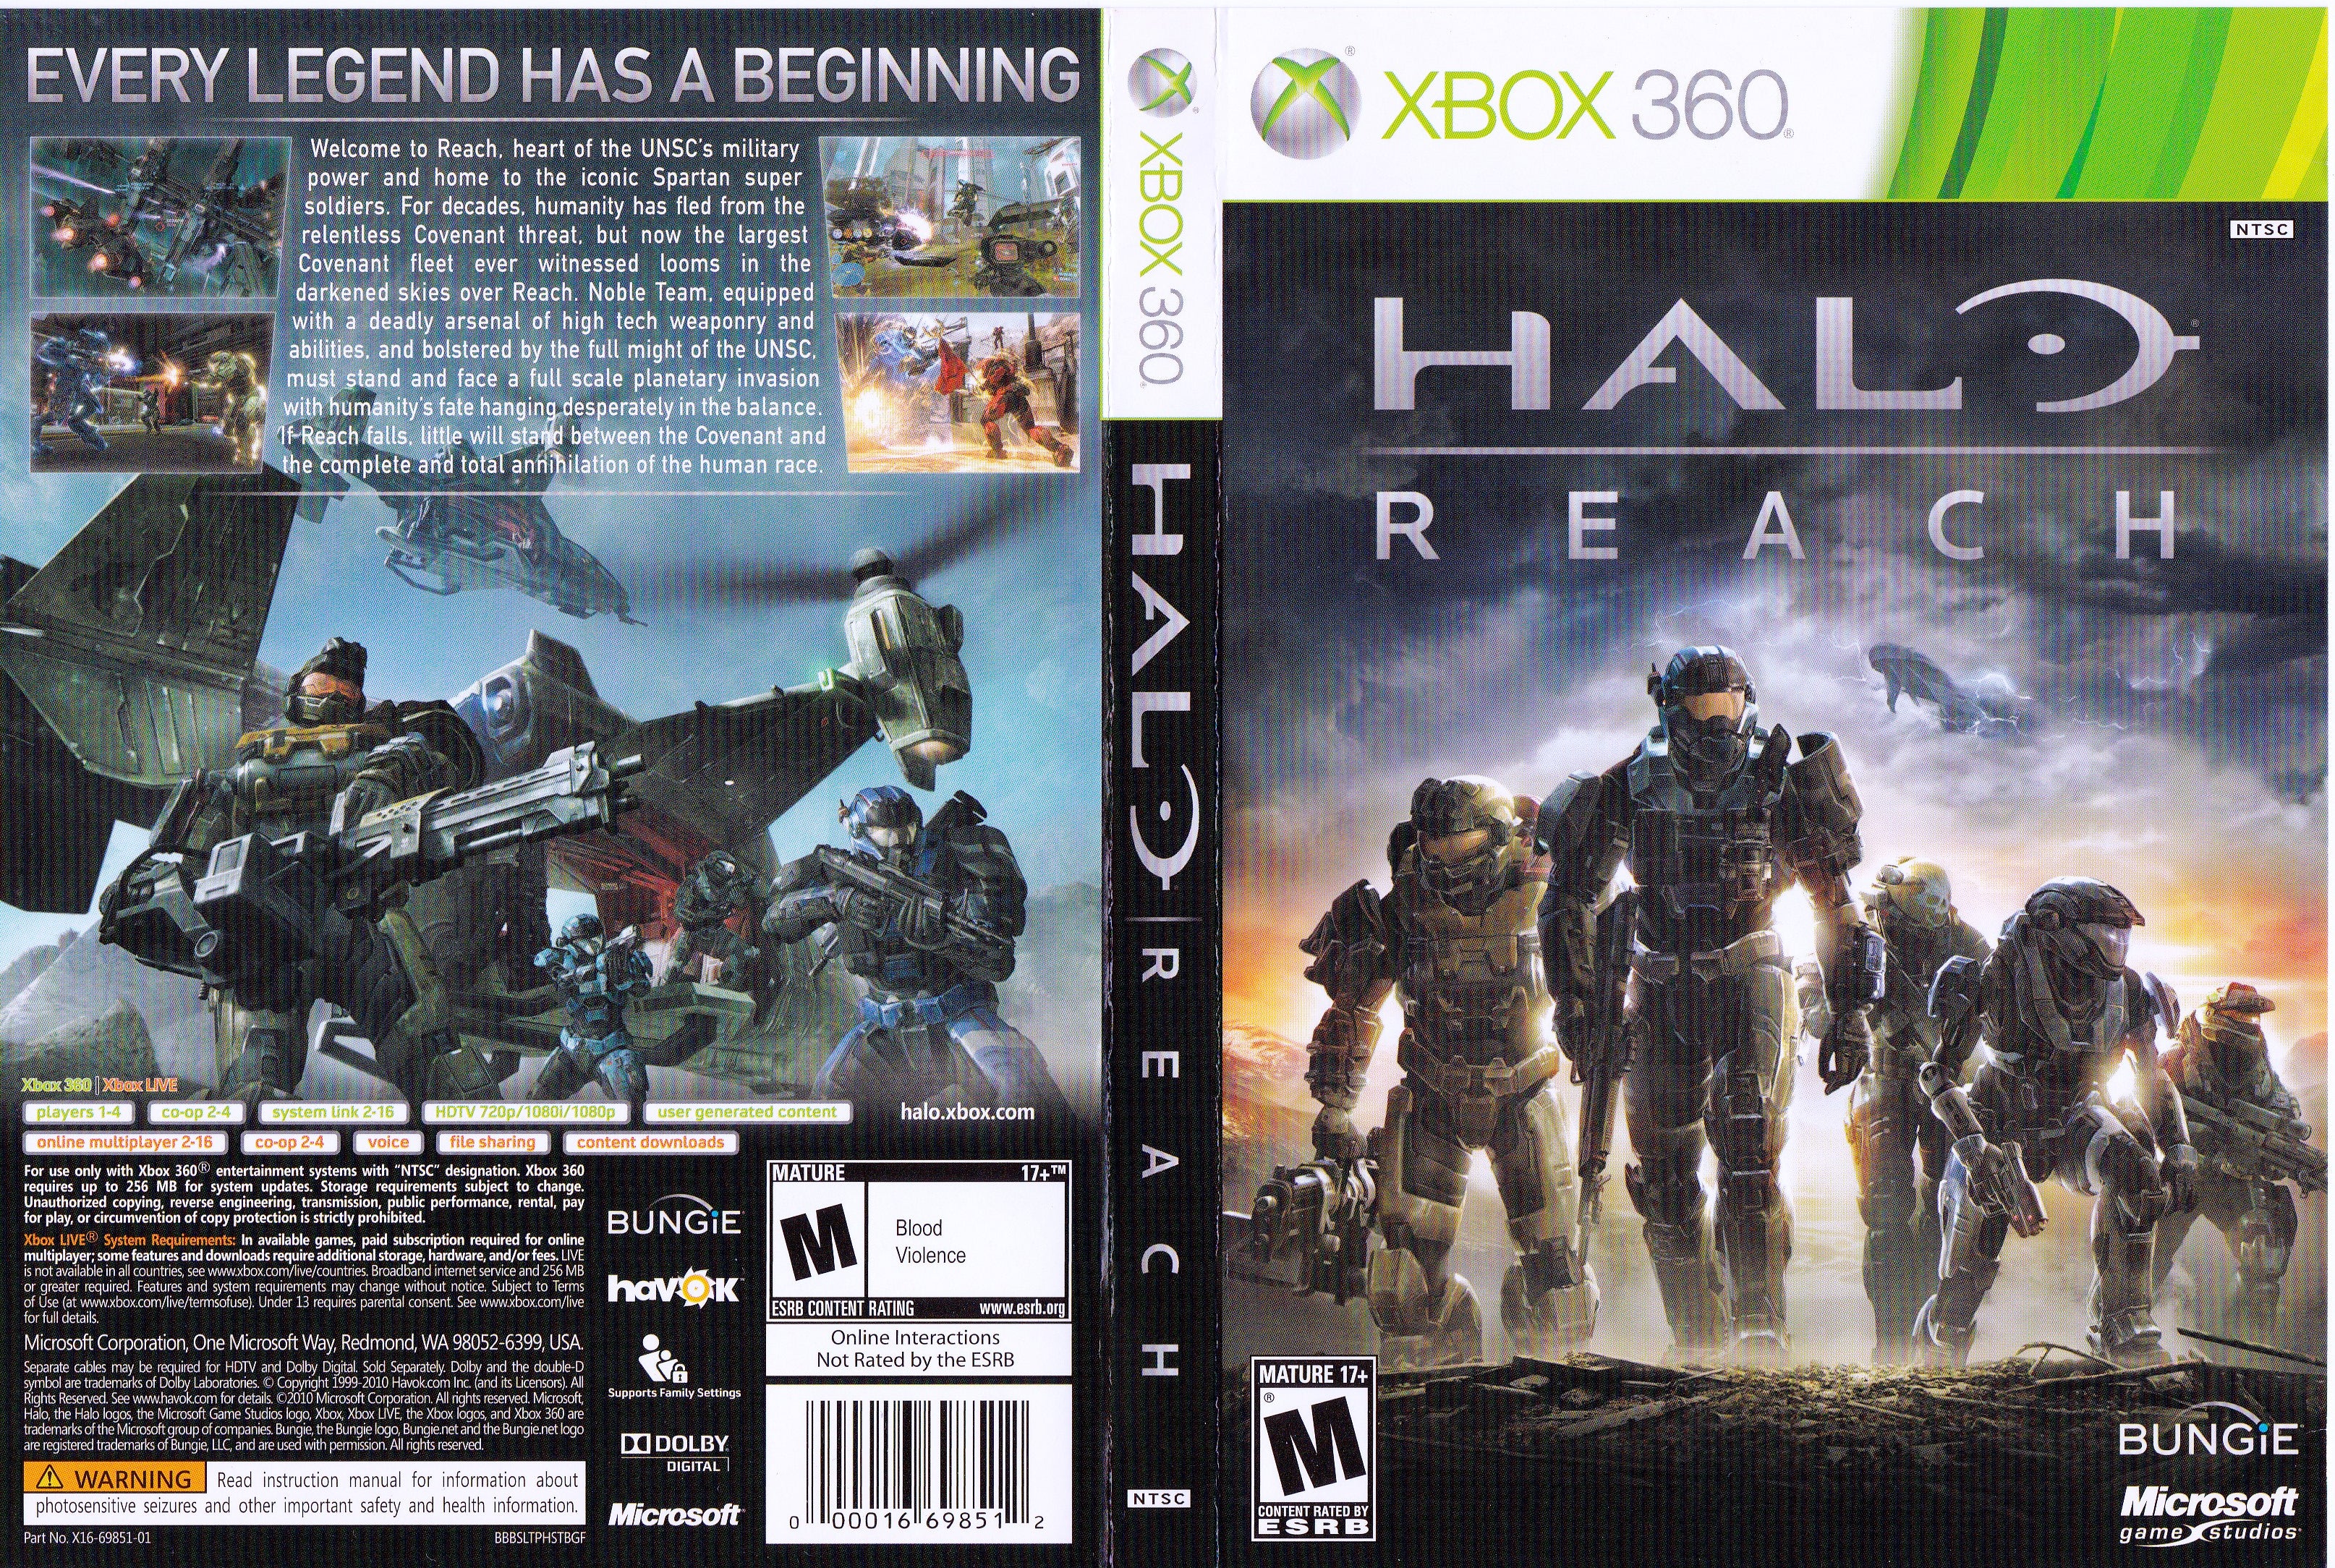 Halo Reach - Xbox 360 Game